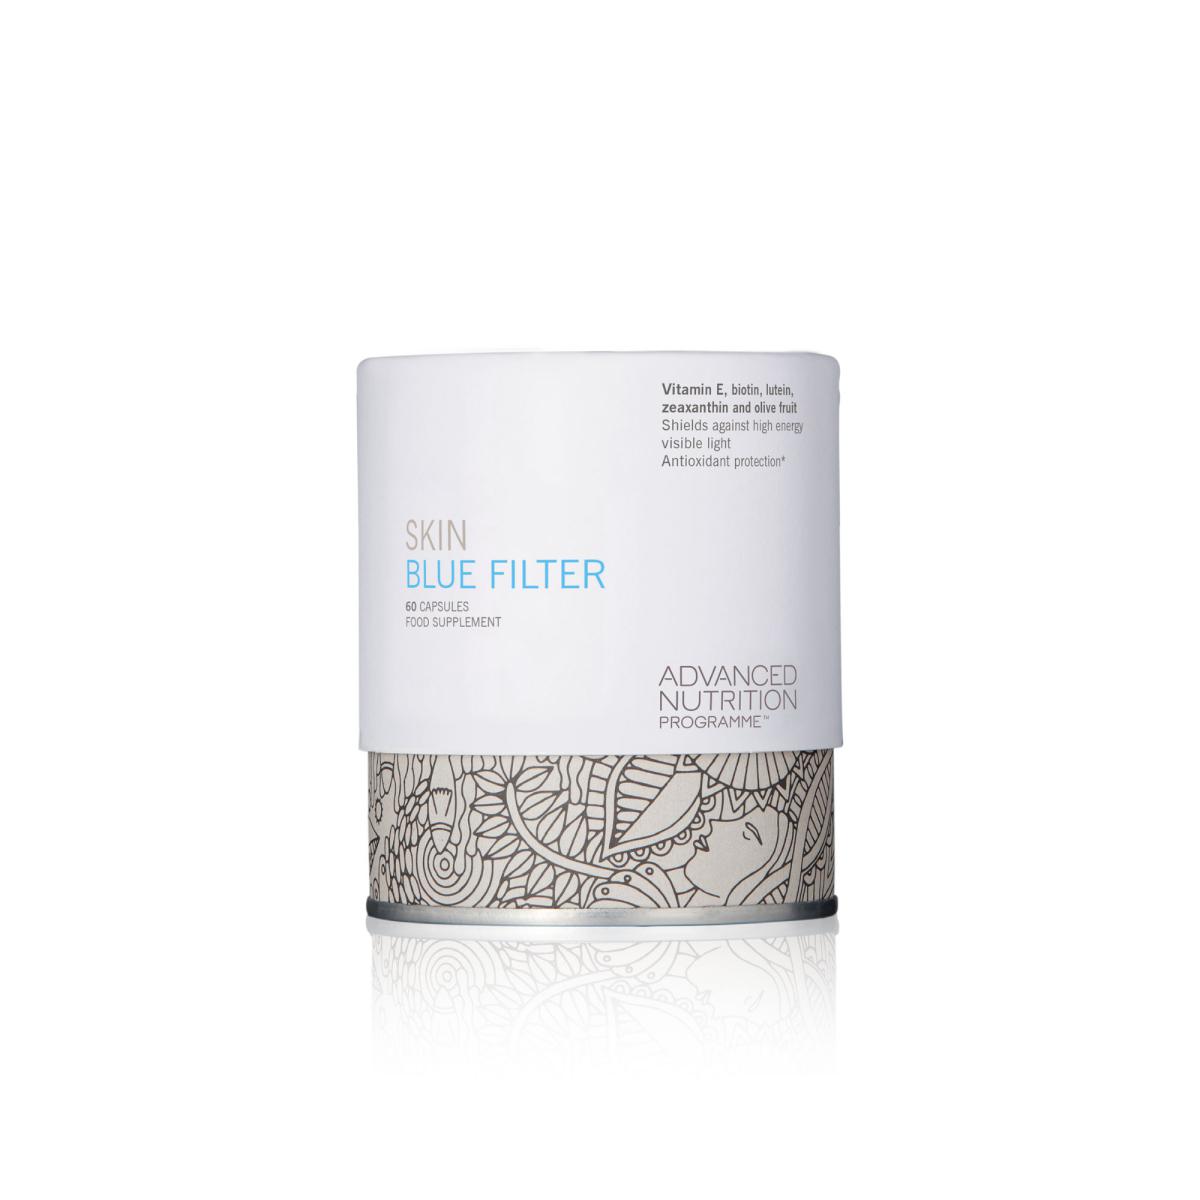 Комплекс для кожи с защитой от синего света Skin Blue Filter, Advanced Nutrition Programme, 5920 руб. (advancednutritionprogramme.ru)